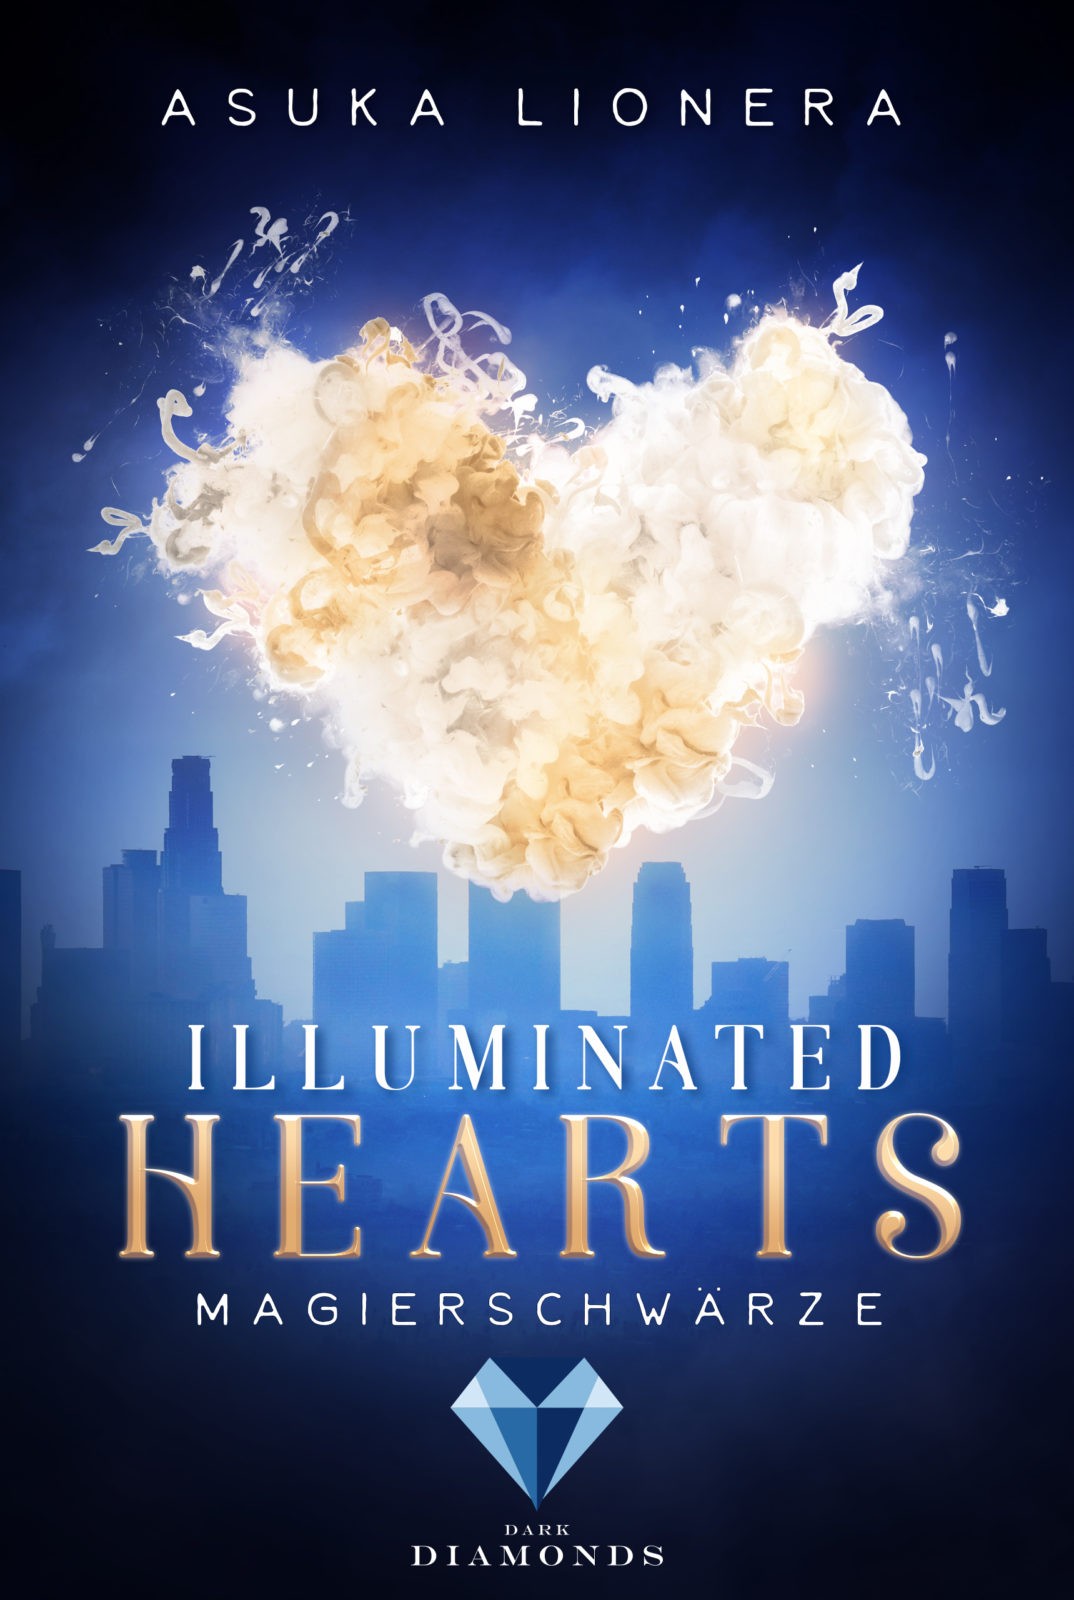 Illuminated Hearts (1): Magierschwärze